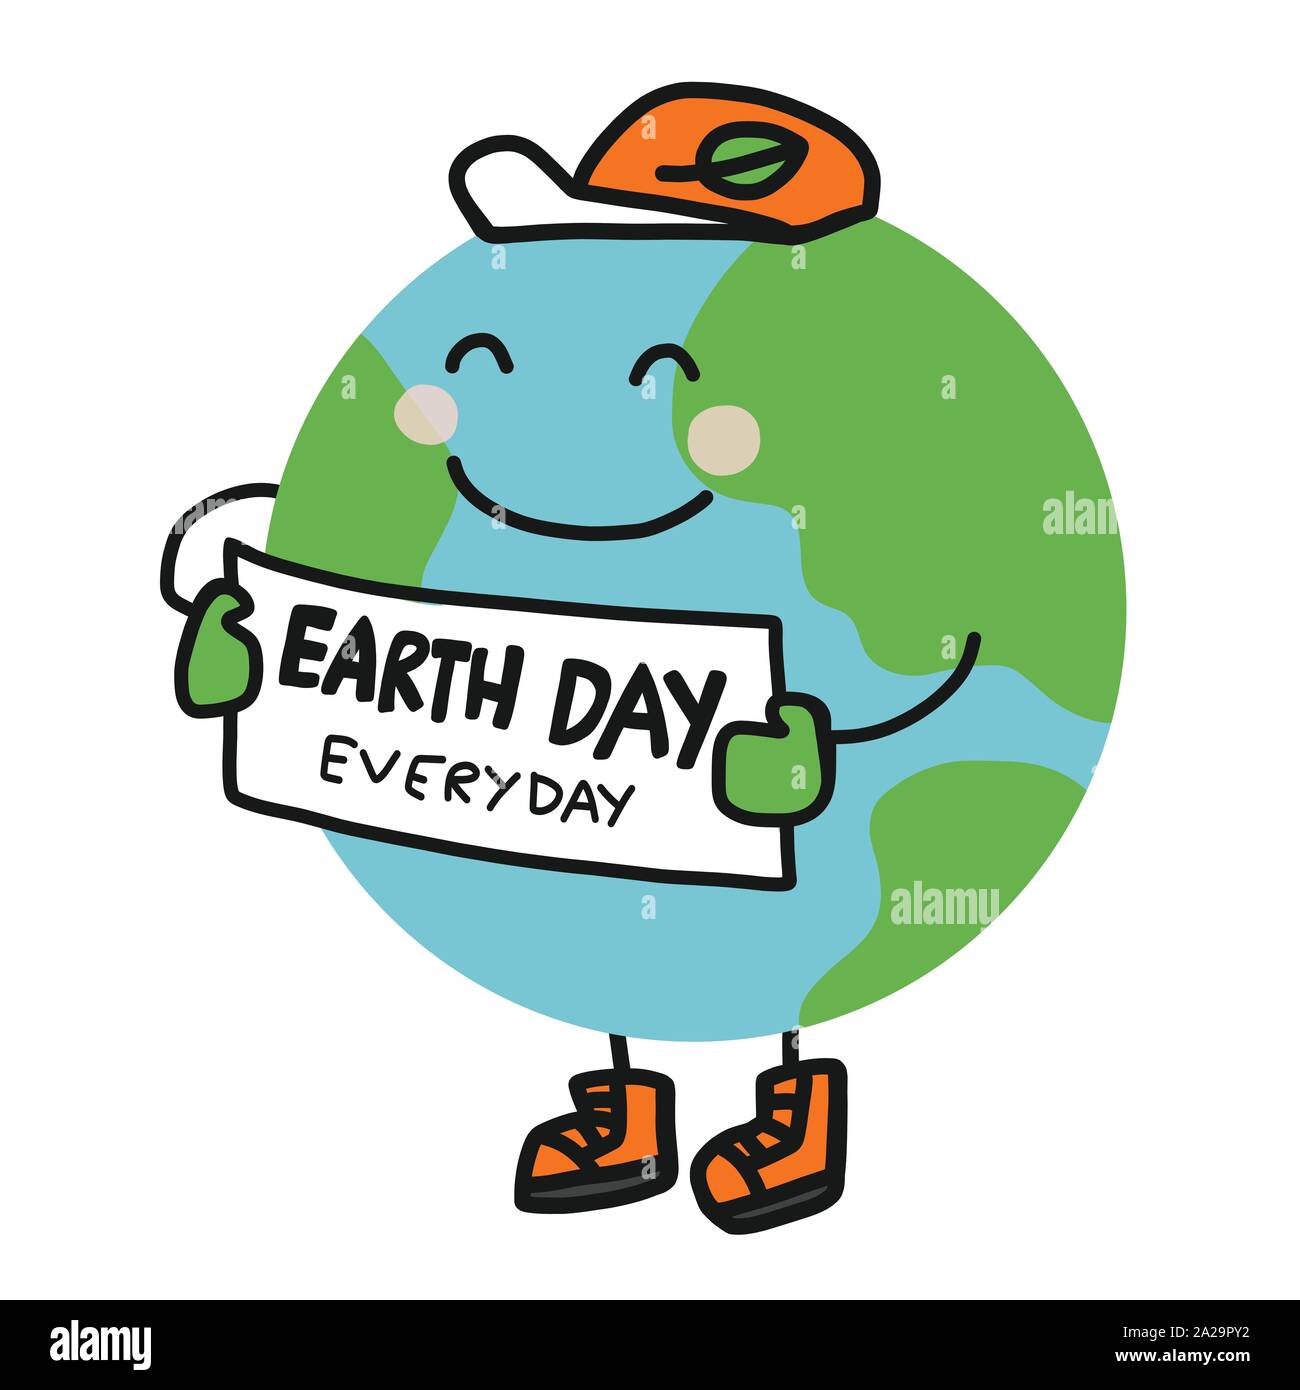 Earth day everyday, world cartoon vector illustration Stock Vector Image &  Art - Alamy